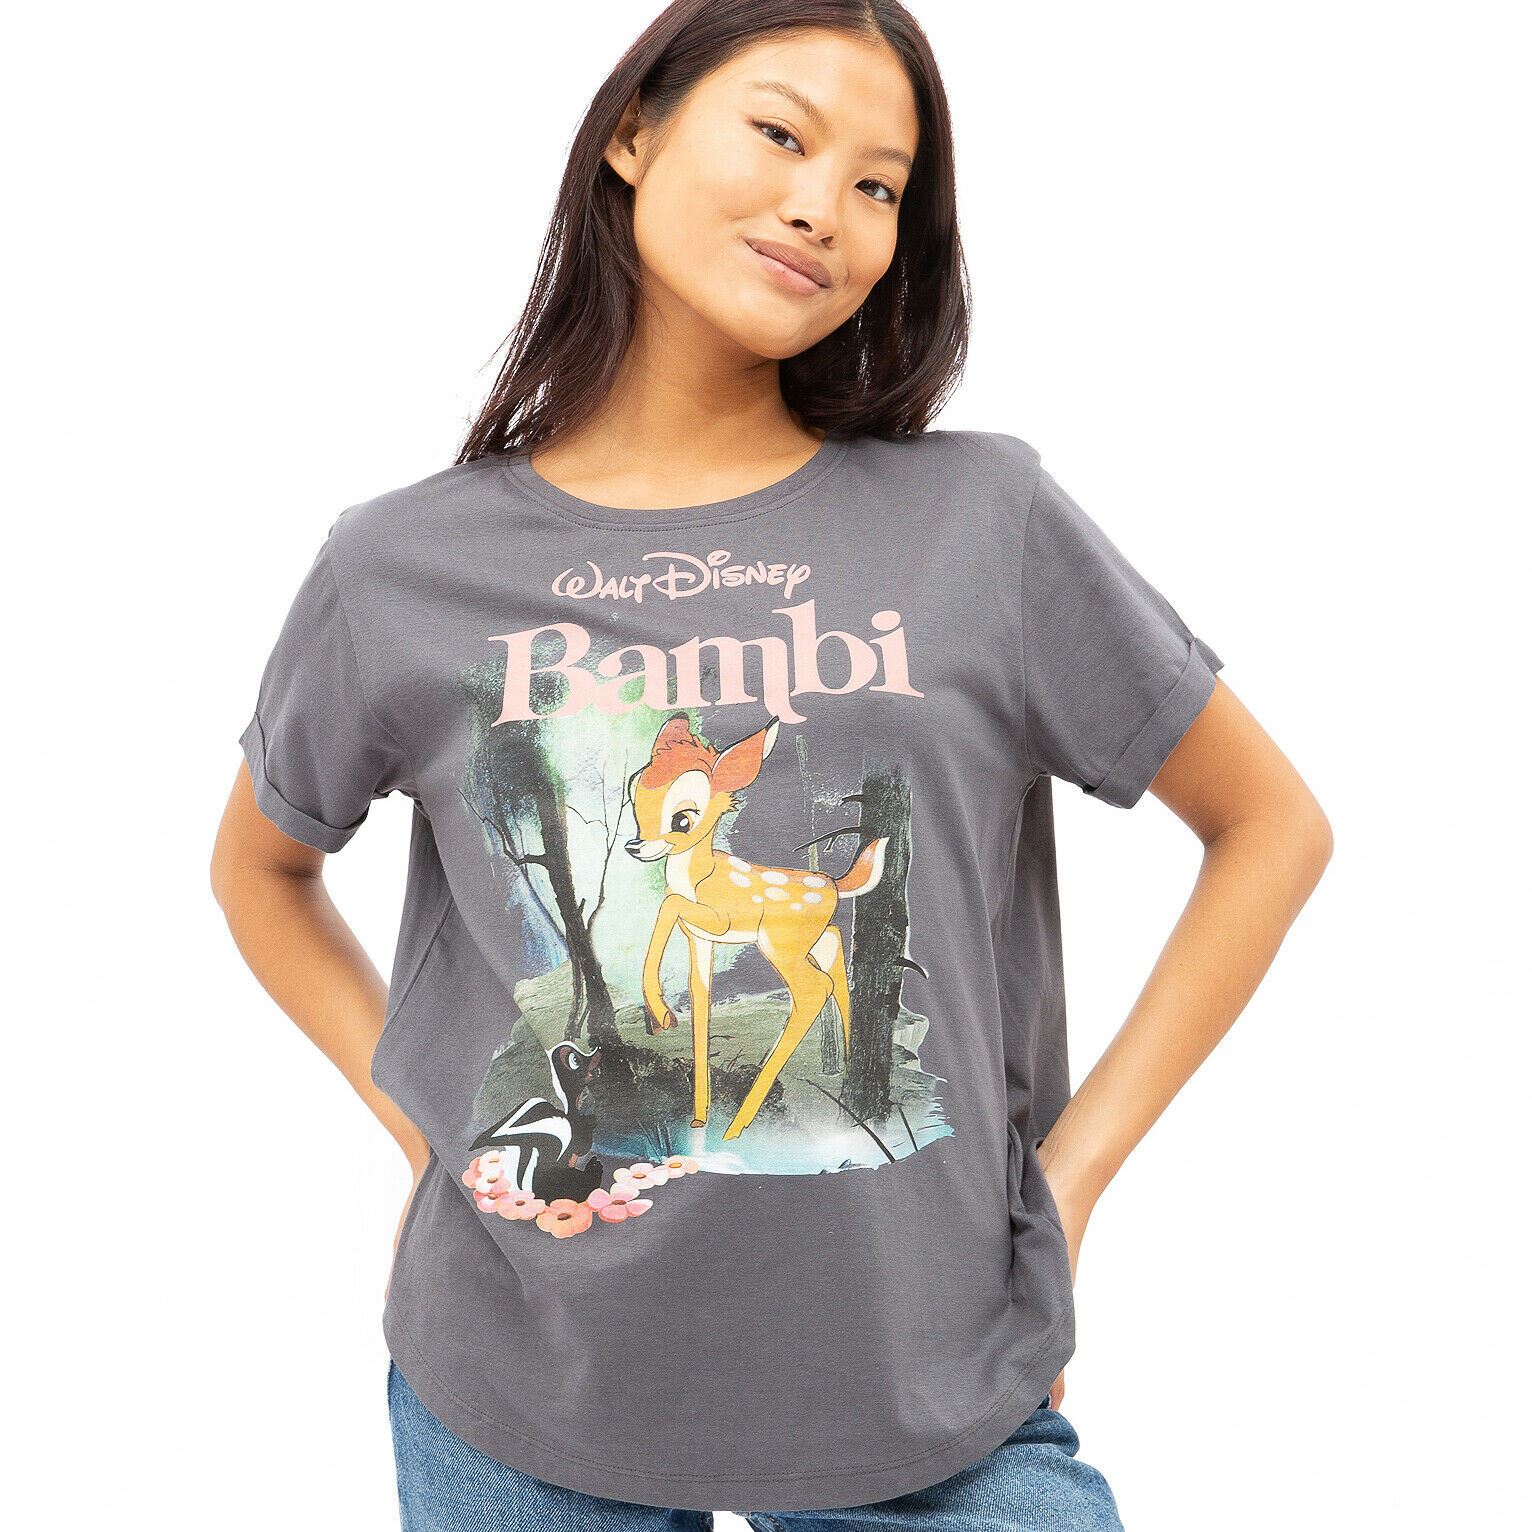 Official Disney Ladies Bambi | eBay Fashion Woodland - T-shirt S XL Black